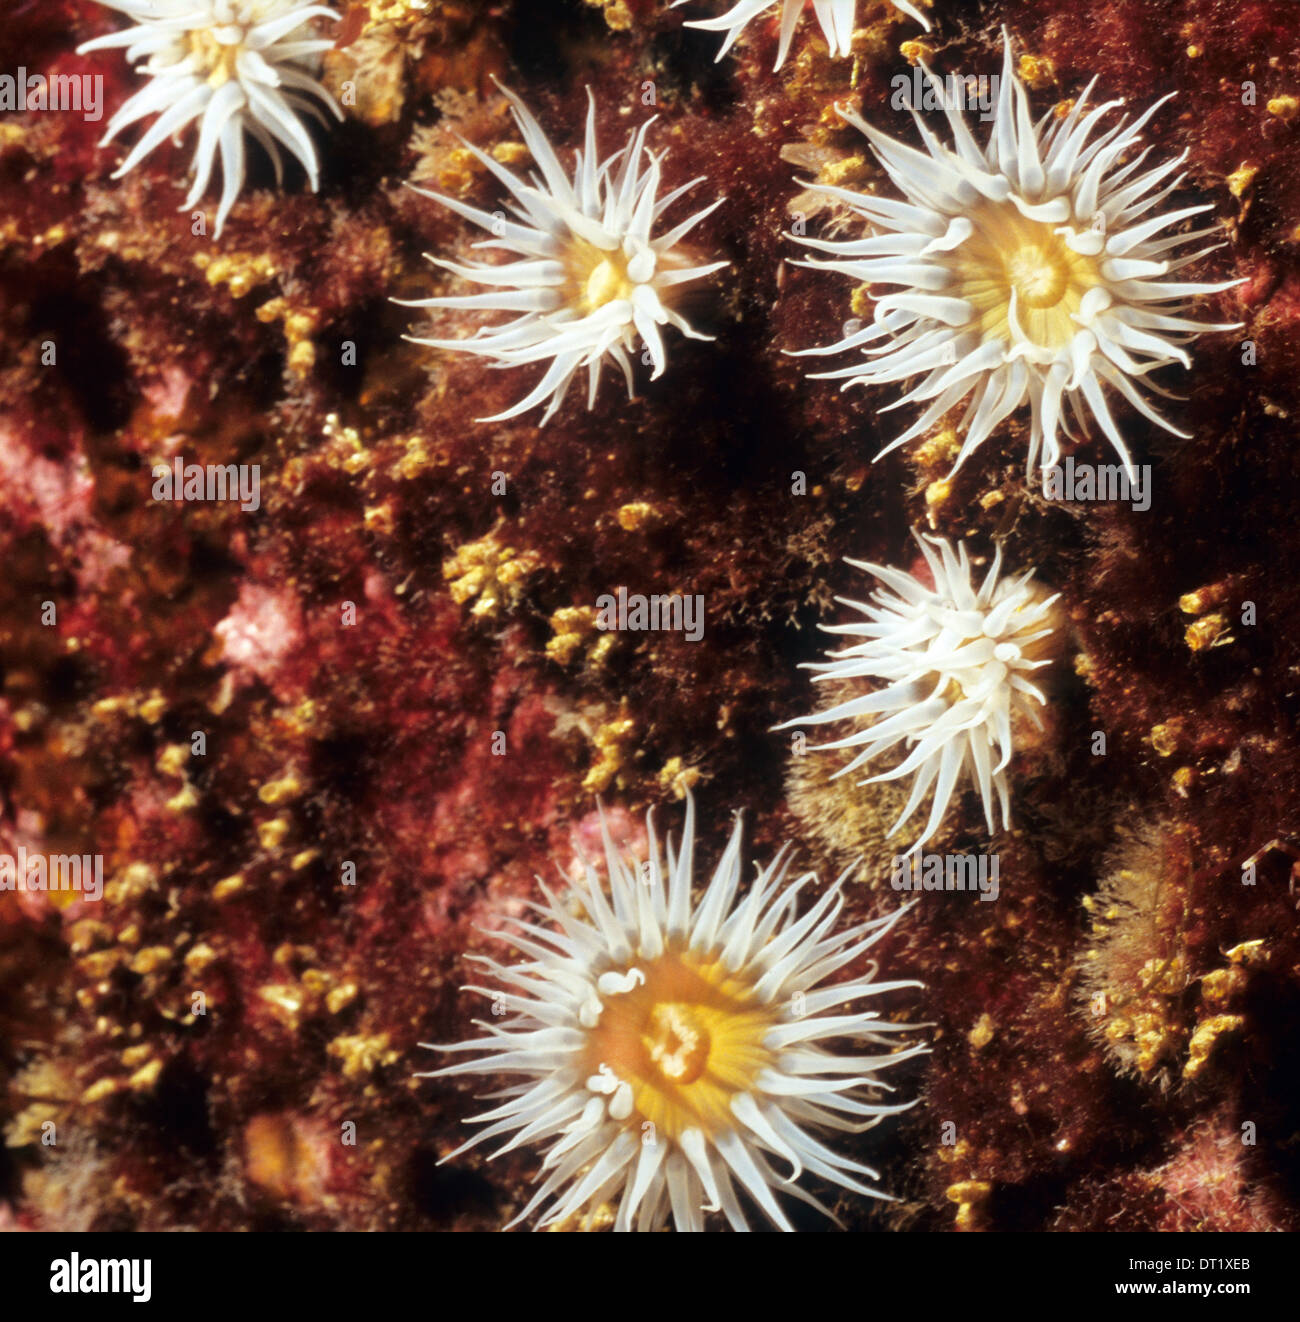 Underwater anemones (Actinothoe Sphyrodeta) off the coast of St Kilda. Scotland Stock Photo